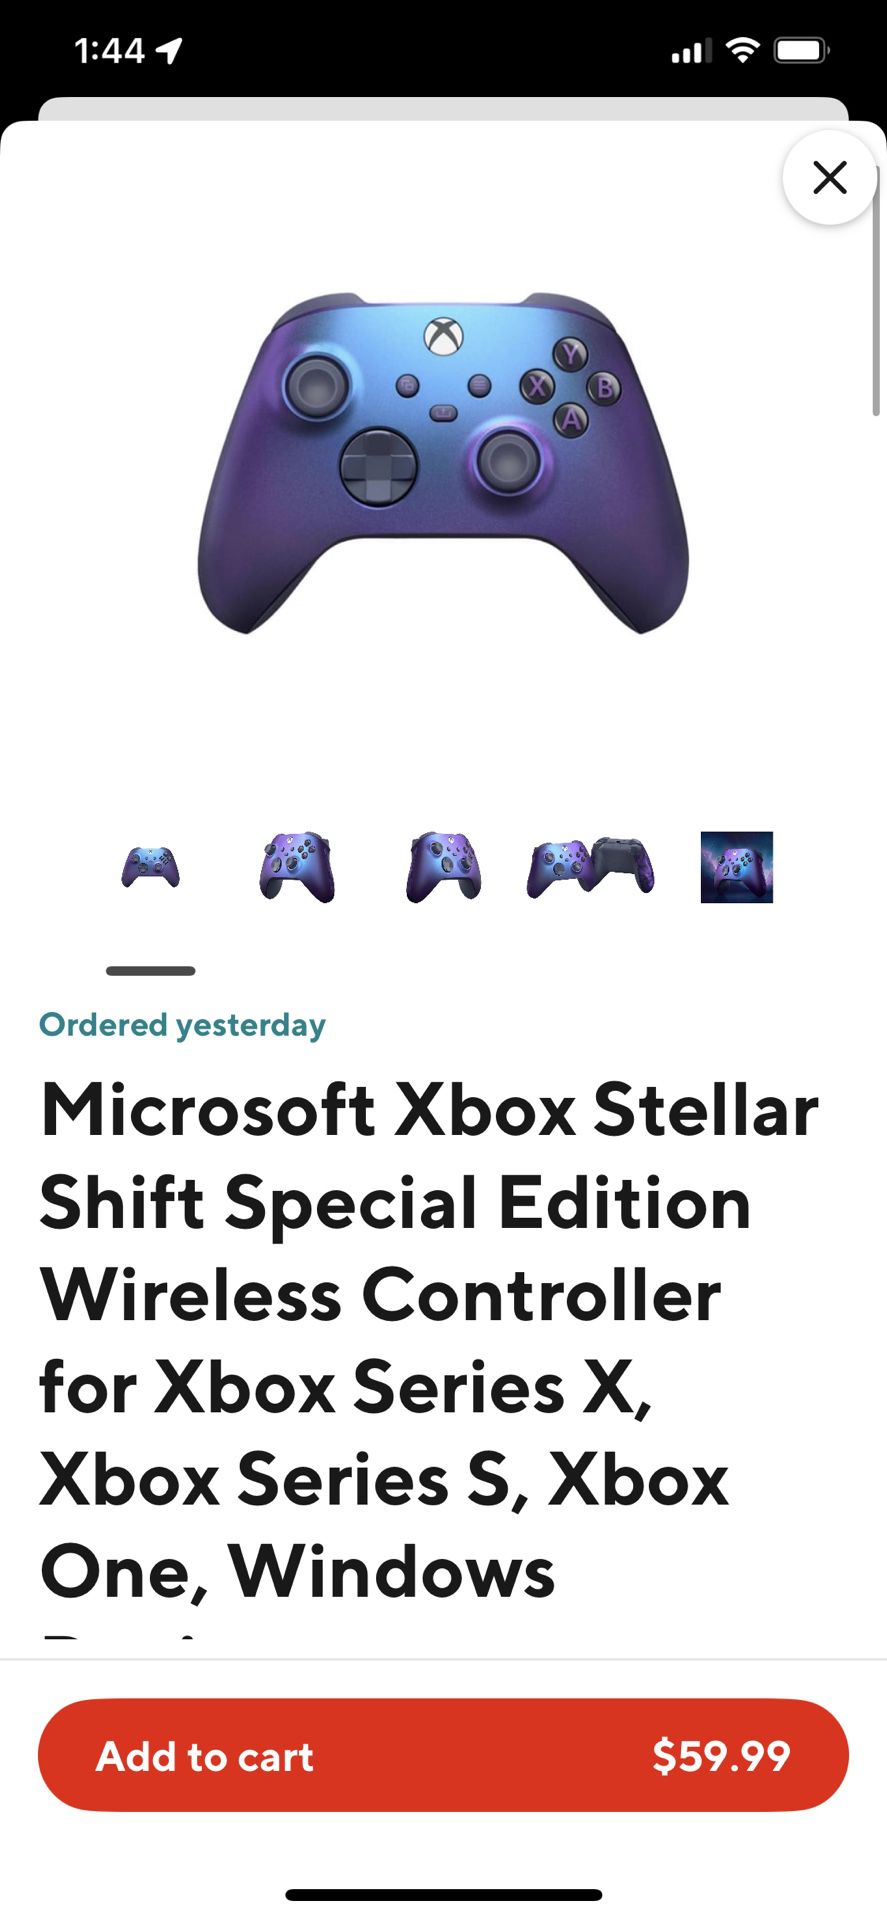 Microsoft Xbox Stellar Xbox Series X Controller